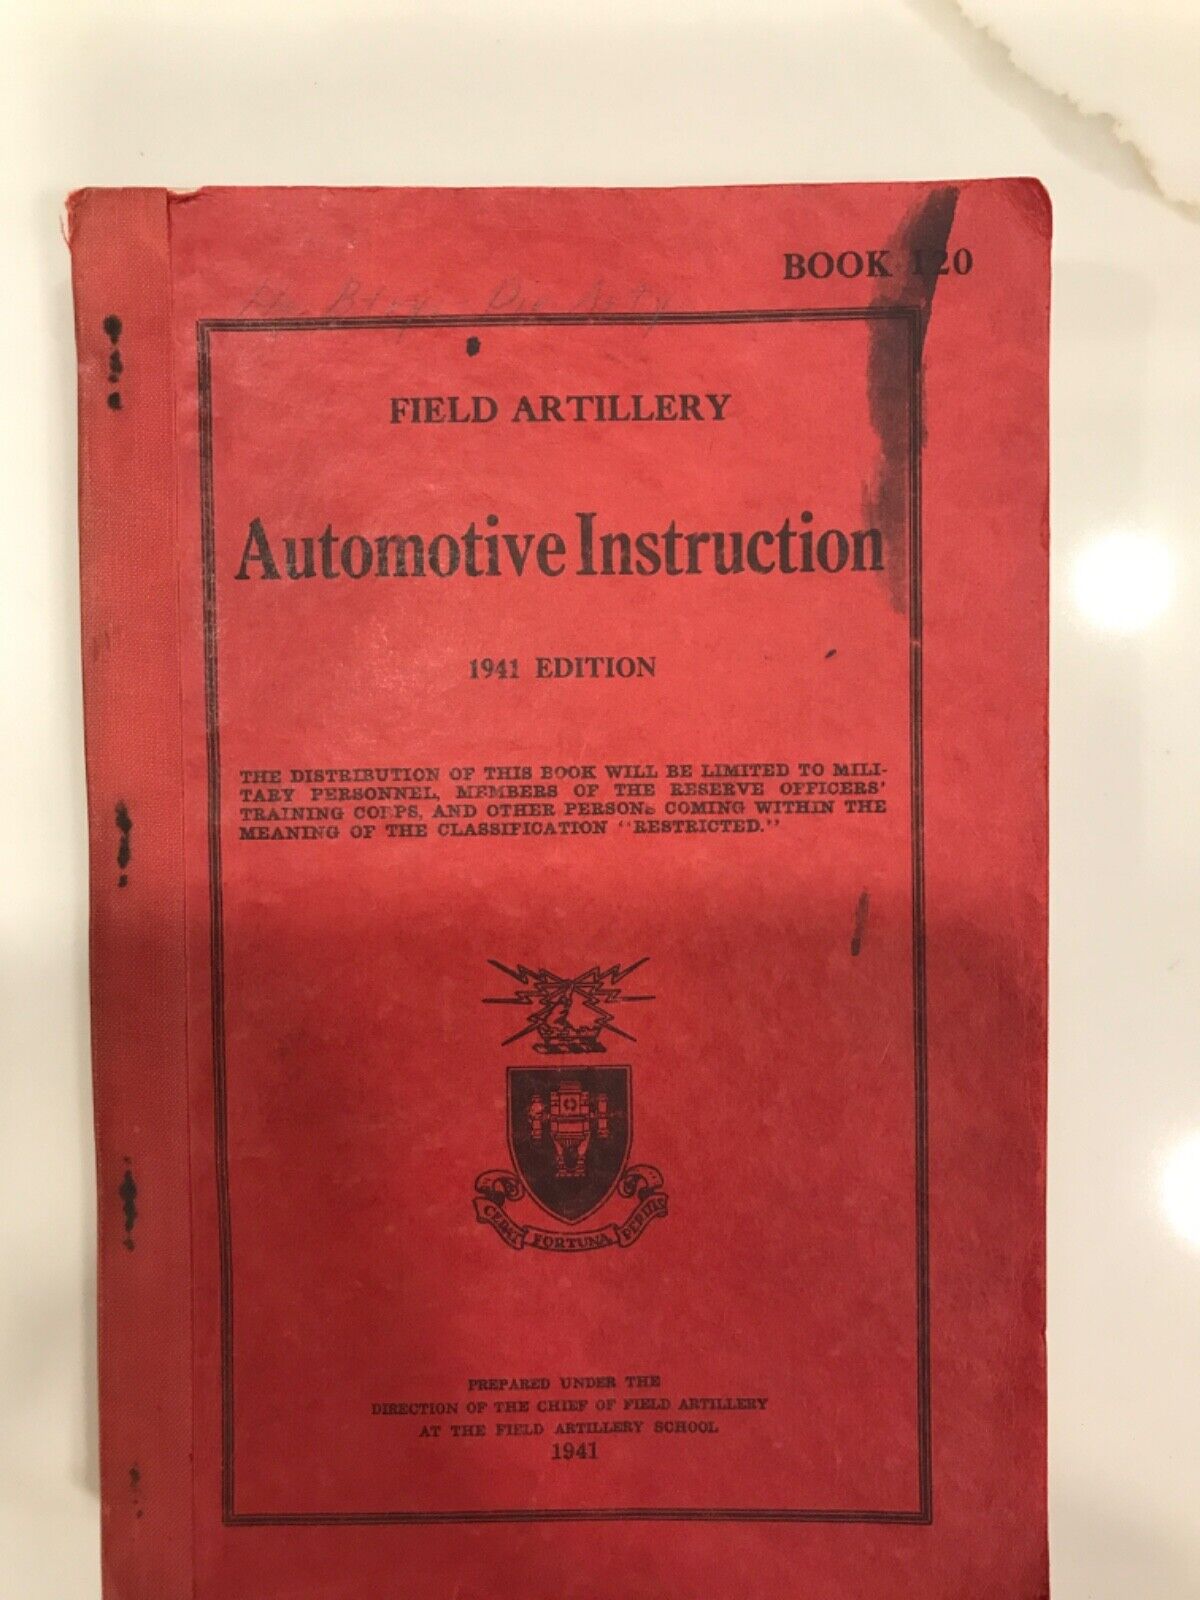 Field Artillery Automotive Instruction -1941 Edition - 2nd Print - free postage